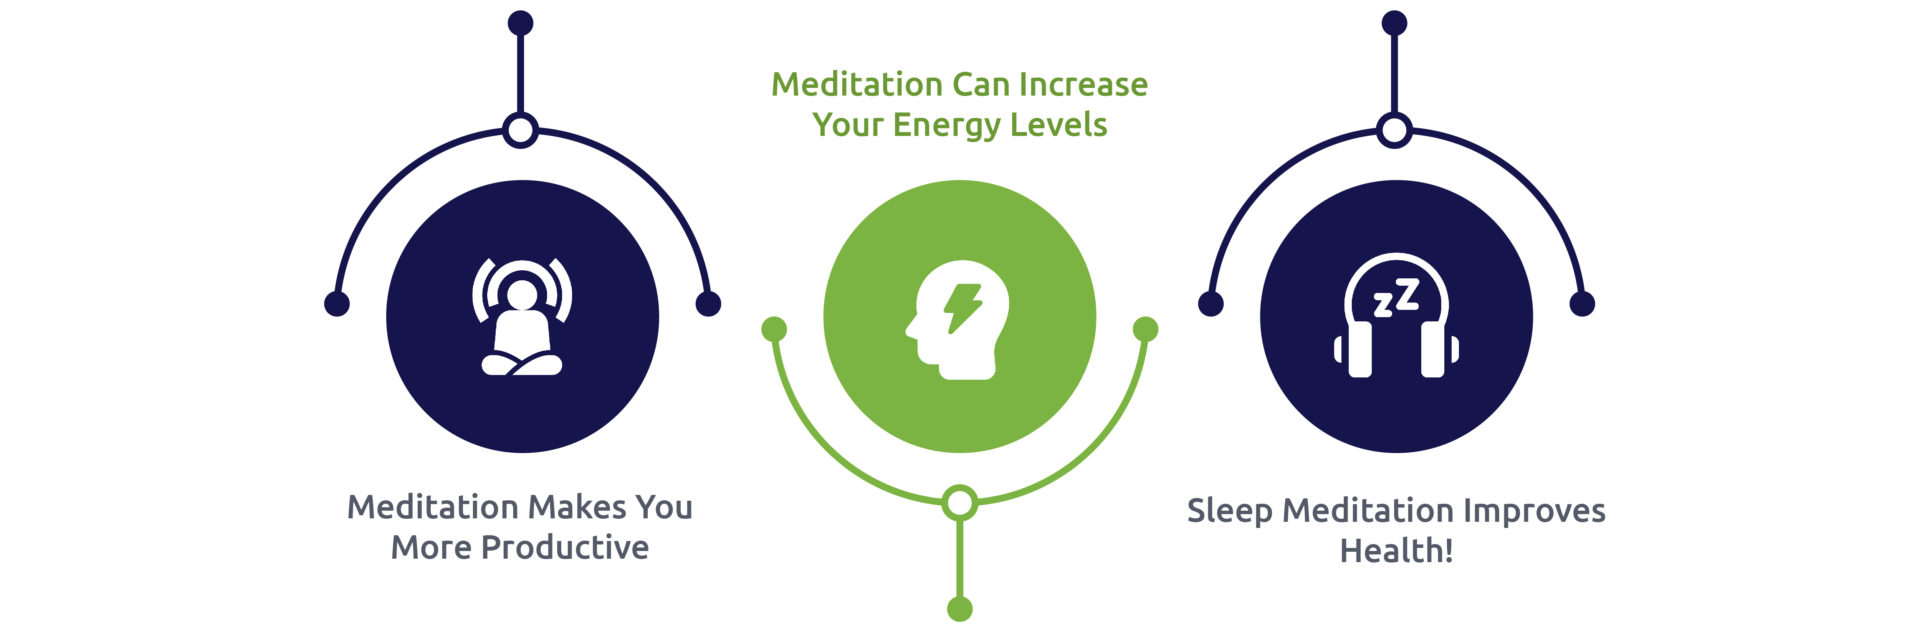 Meditation Makes You More Productive